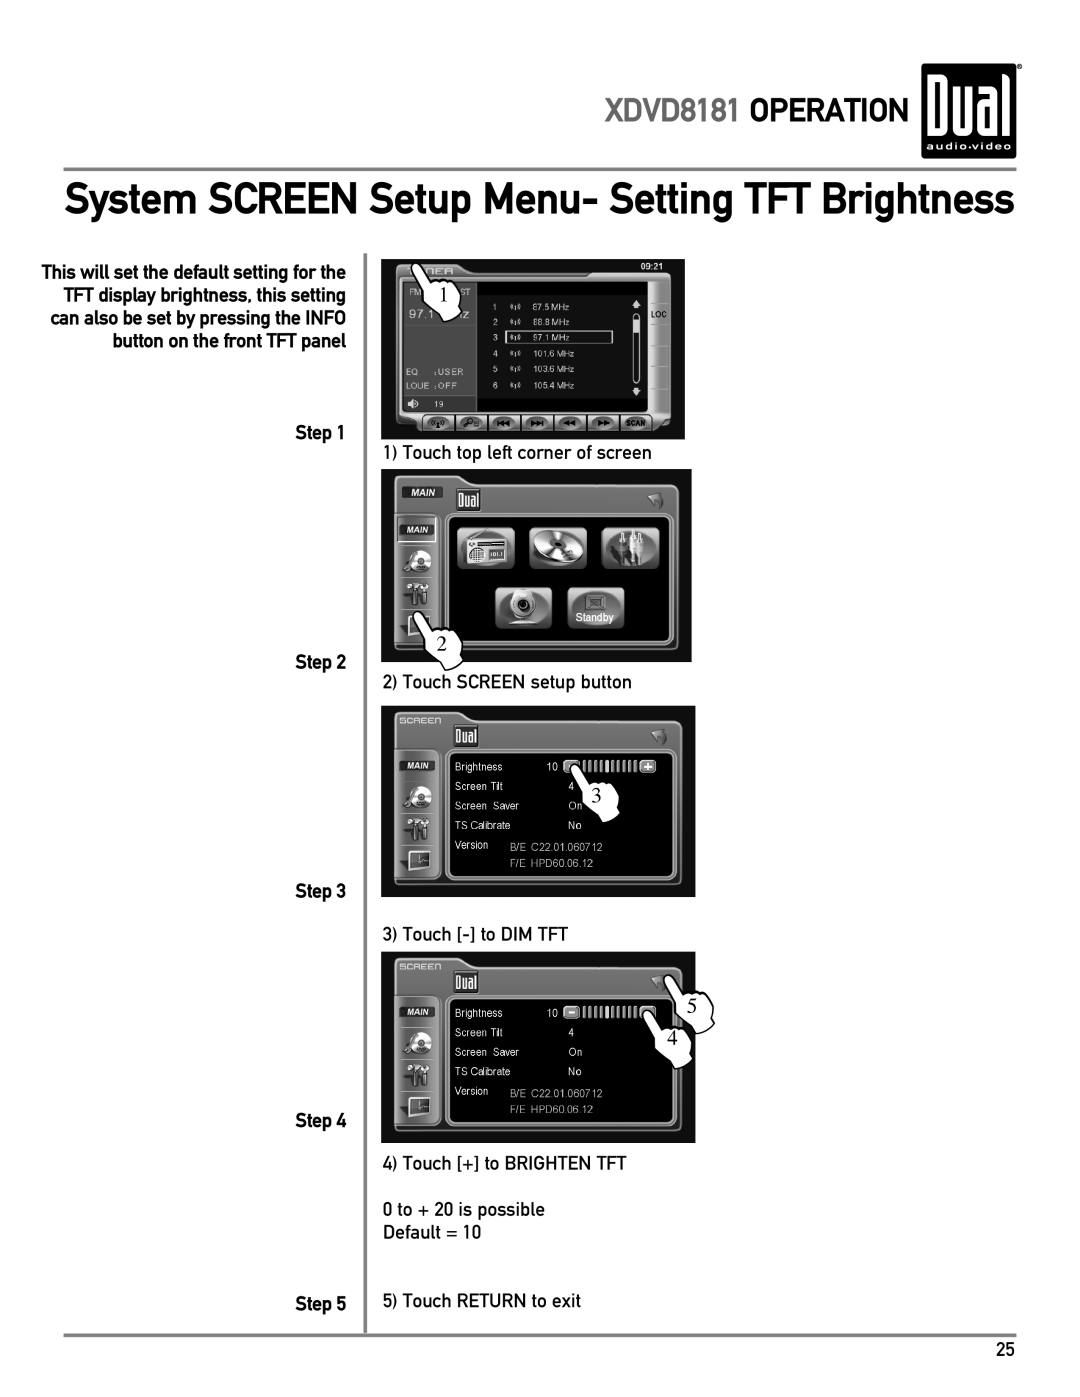 Dual owner manual System SCREEN Setup Menu- Setting TFT Brightness, L5 L4, XDVD8181 OPERATION, Step Step Step Step 